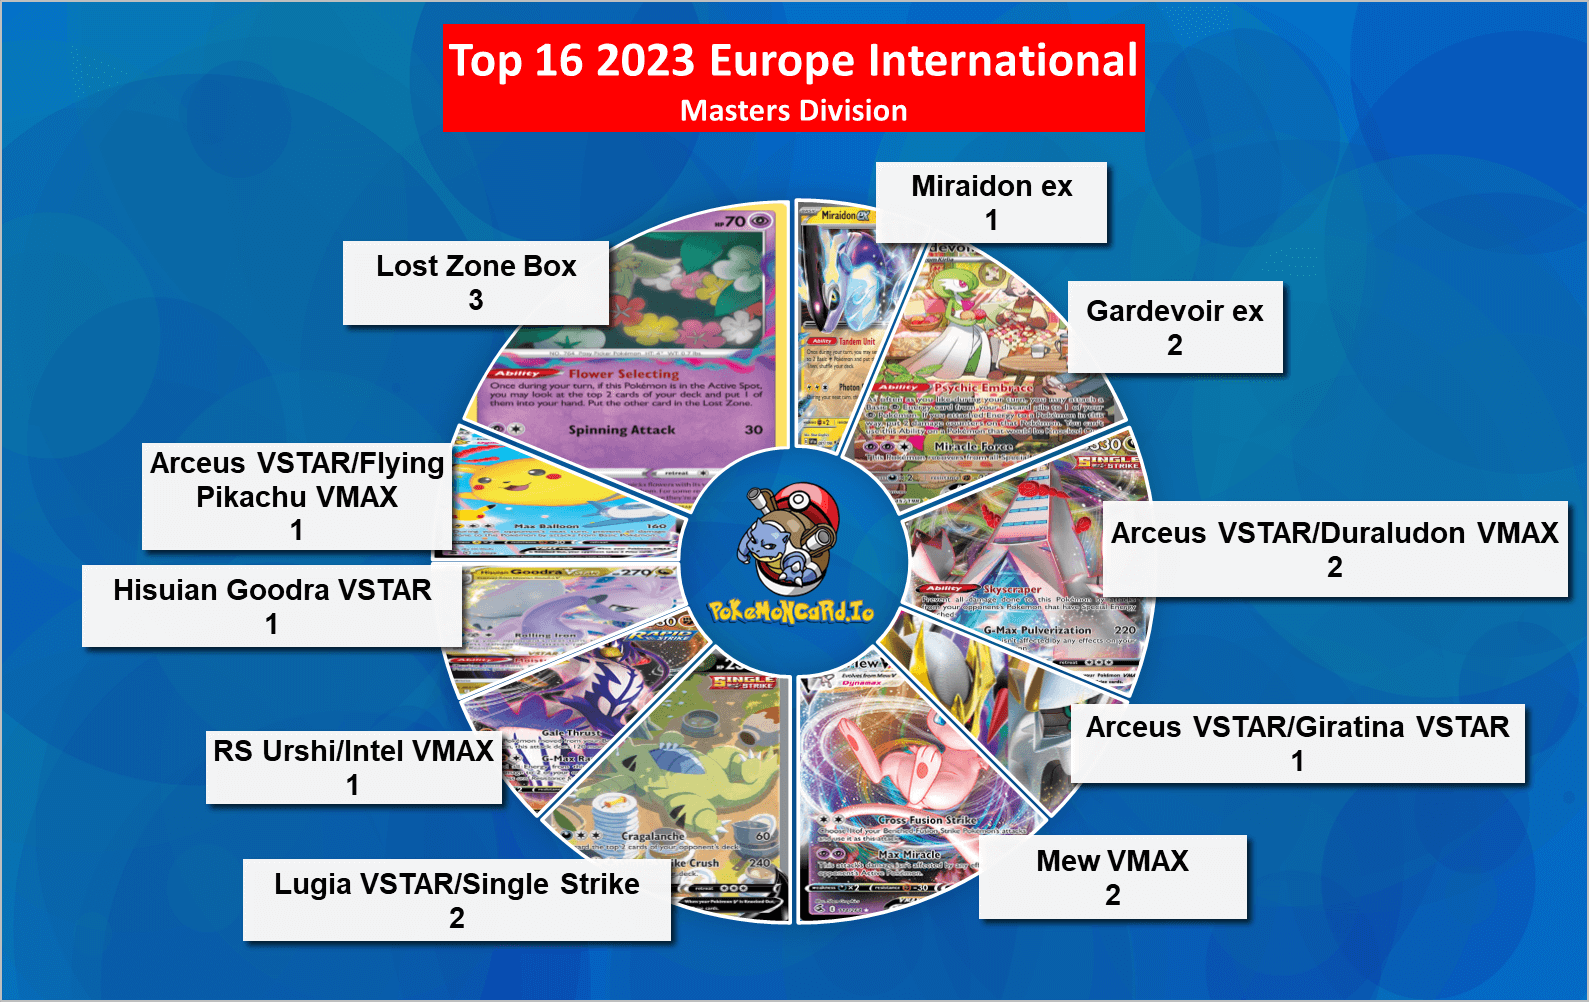 2023 Pokémon TCG Europe International Championships Power Rankings